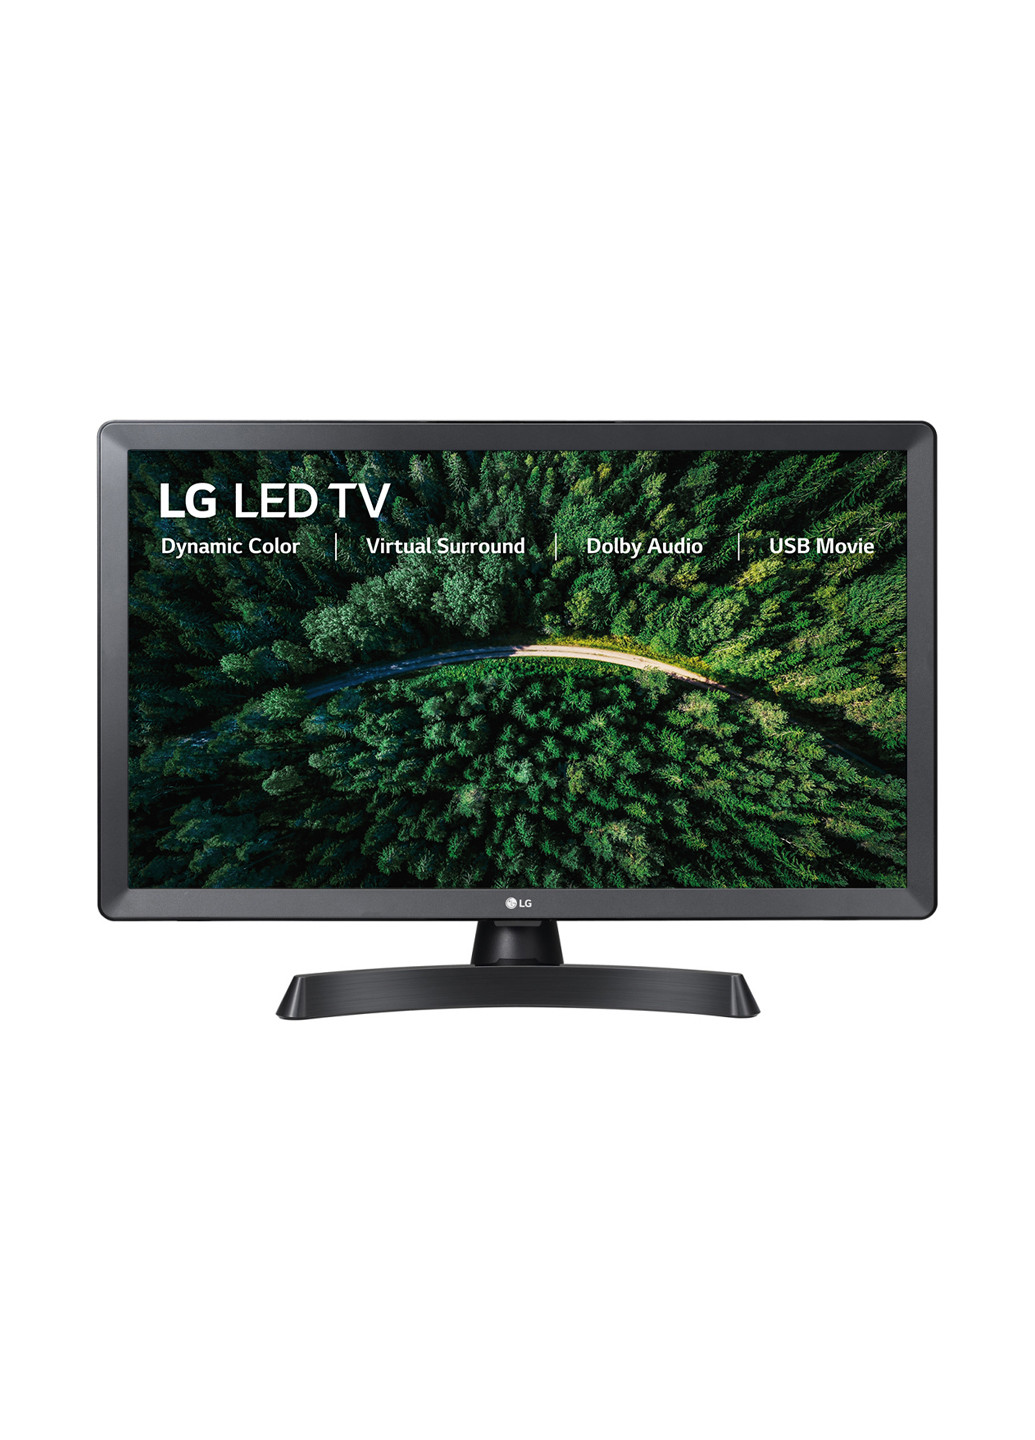 Телевизор LG 28tl510v-pz (141857751)